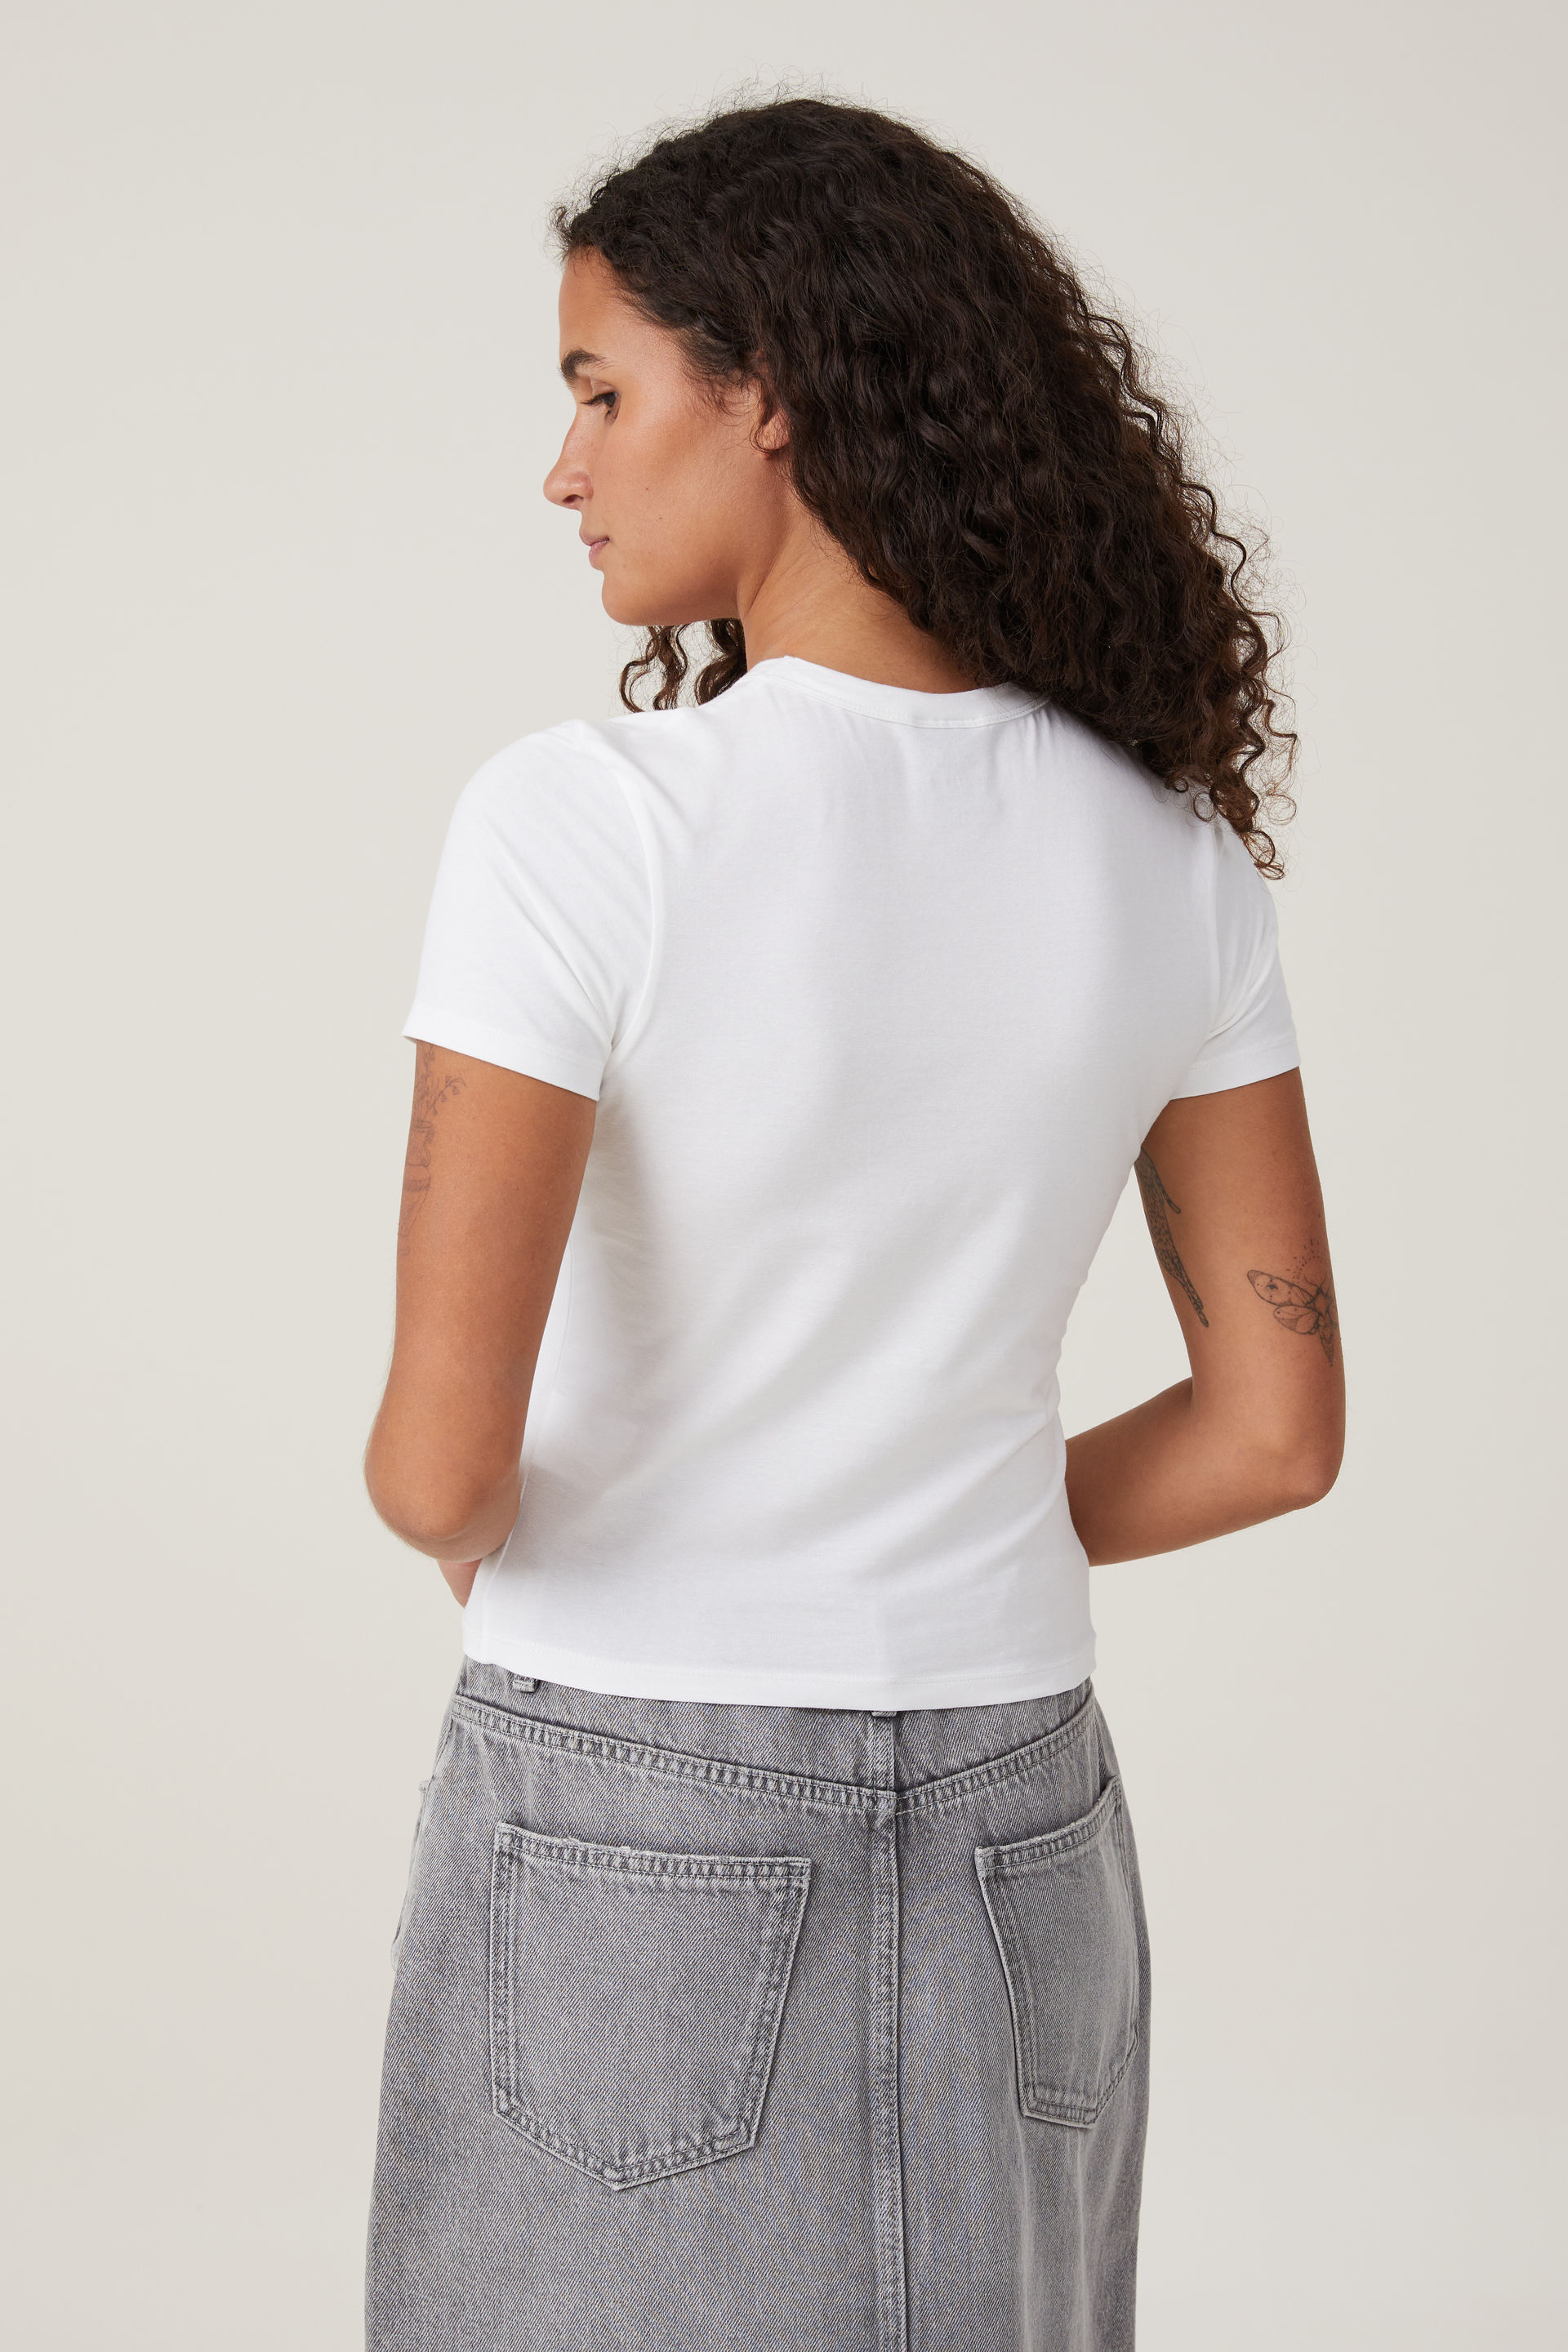 Unisex Essential Slogan White Longline T-Shirt – #NoFuchsGiven